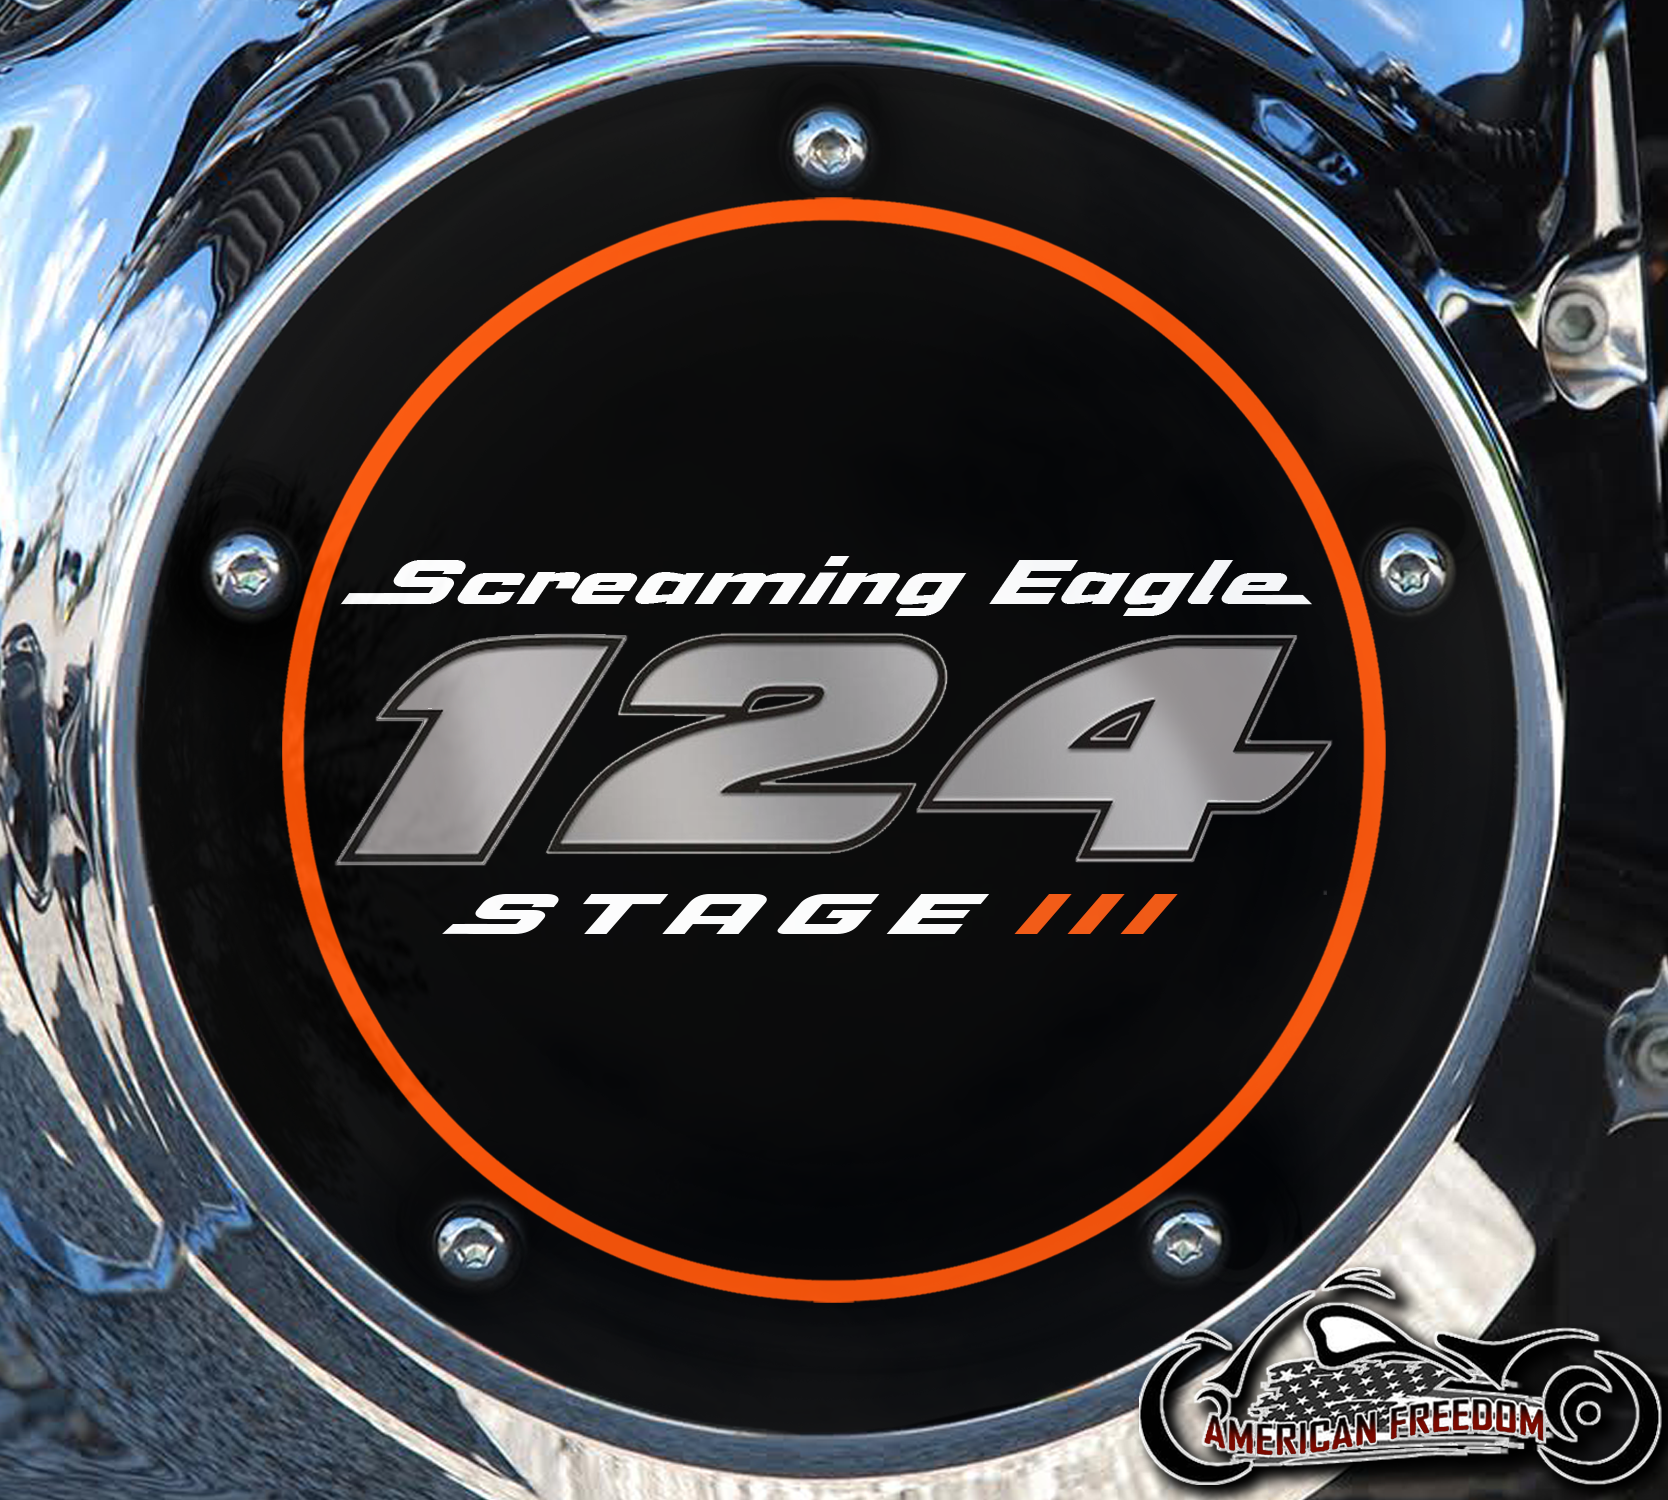 Screaming Eagle Stage III 124 Derby Cover O/L (ORANGE)